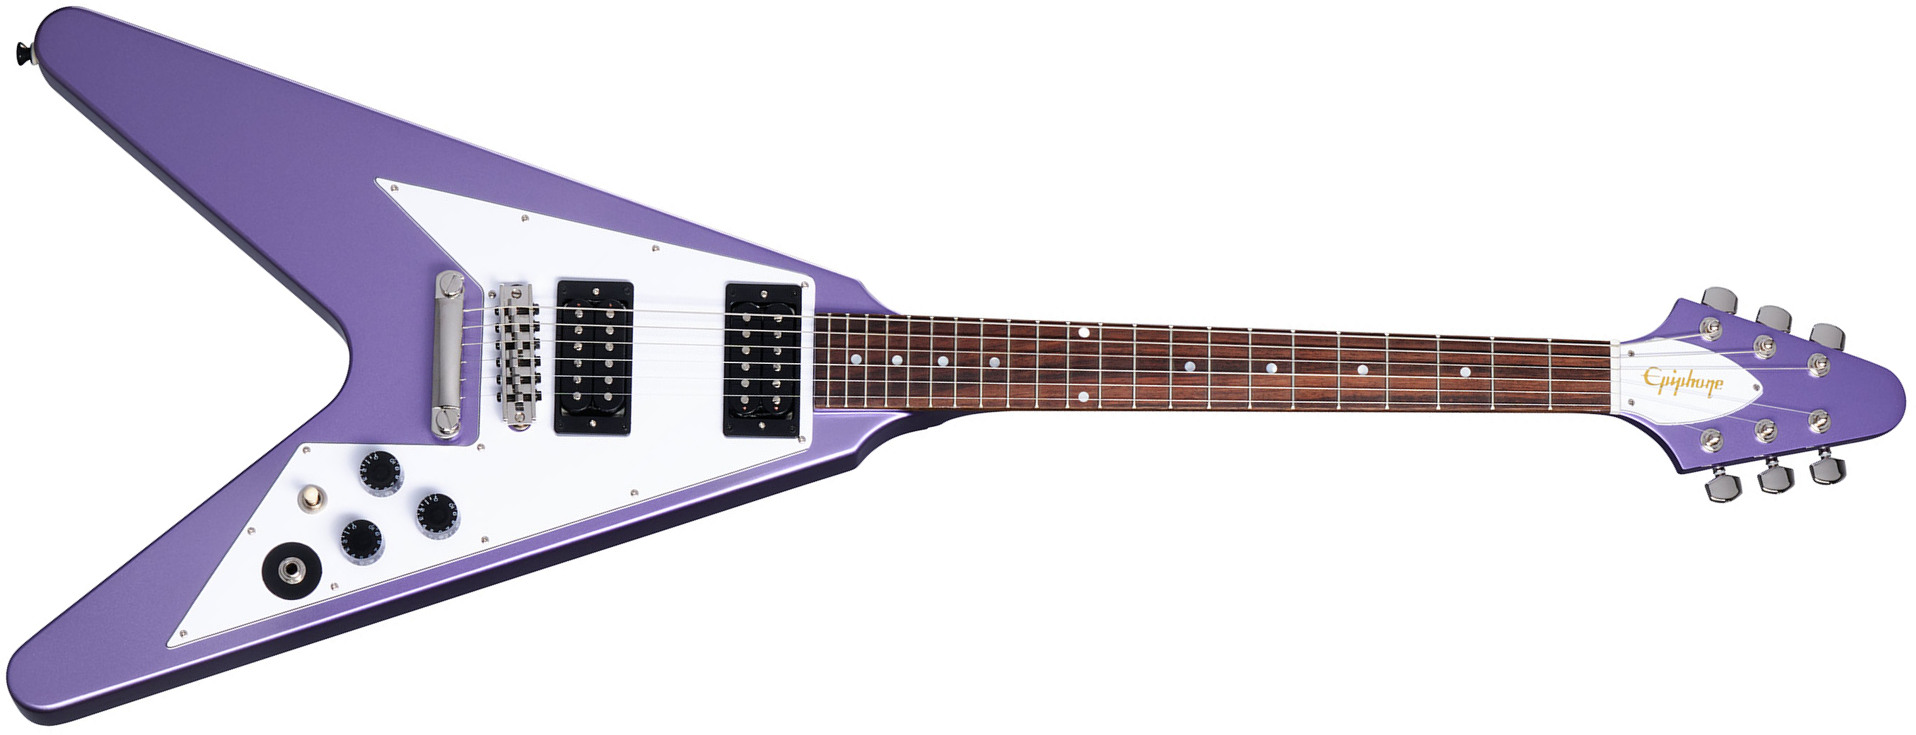 Epiphone Kirk Hammett Flying V 1979 Signature 2h Gibson  Ht Rw - Purple Metallic - Signature electric guitar - Main picture